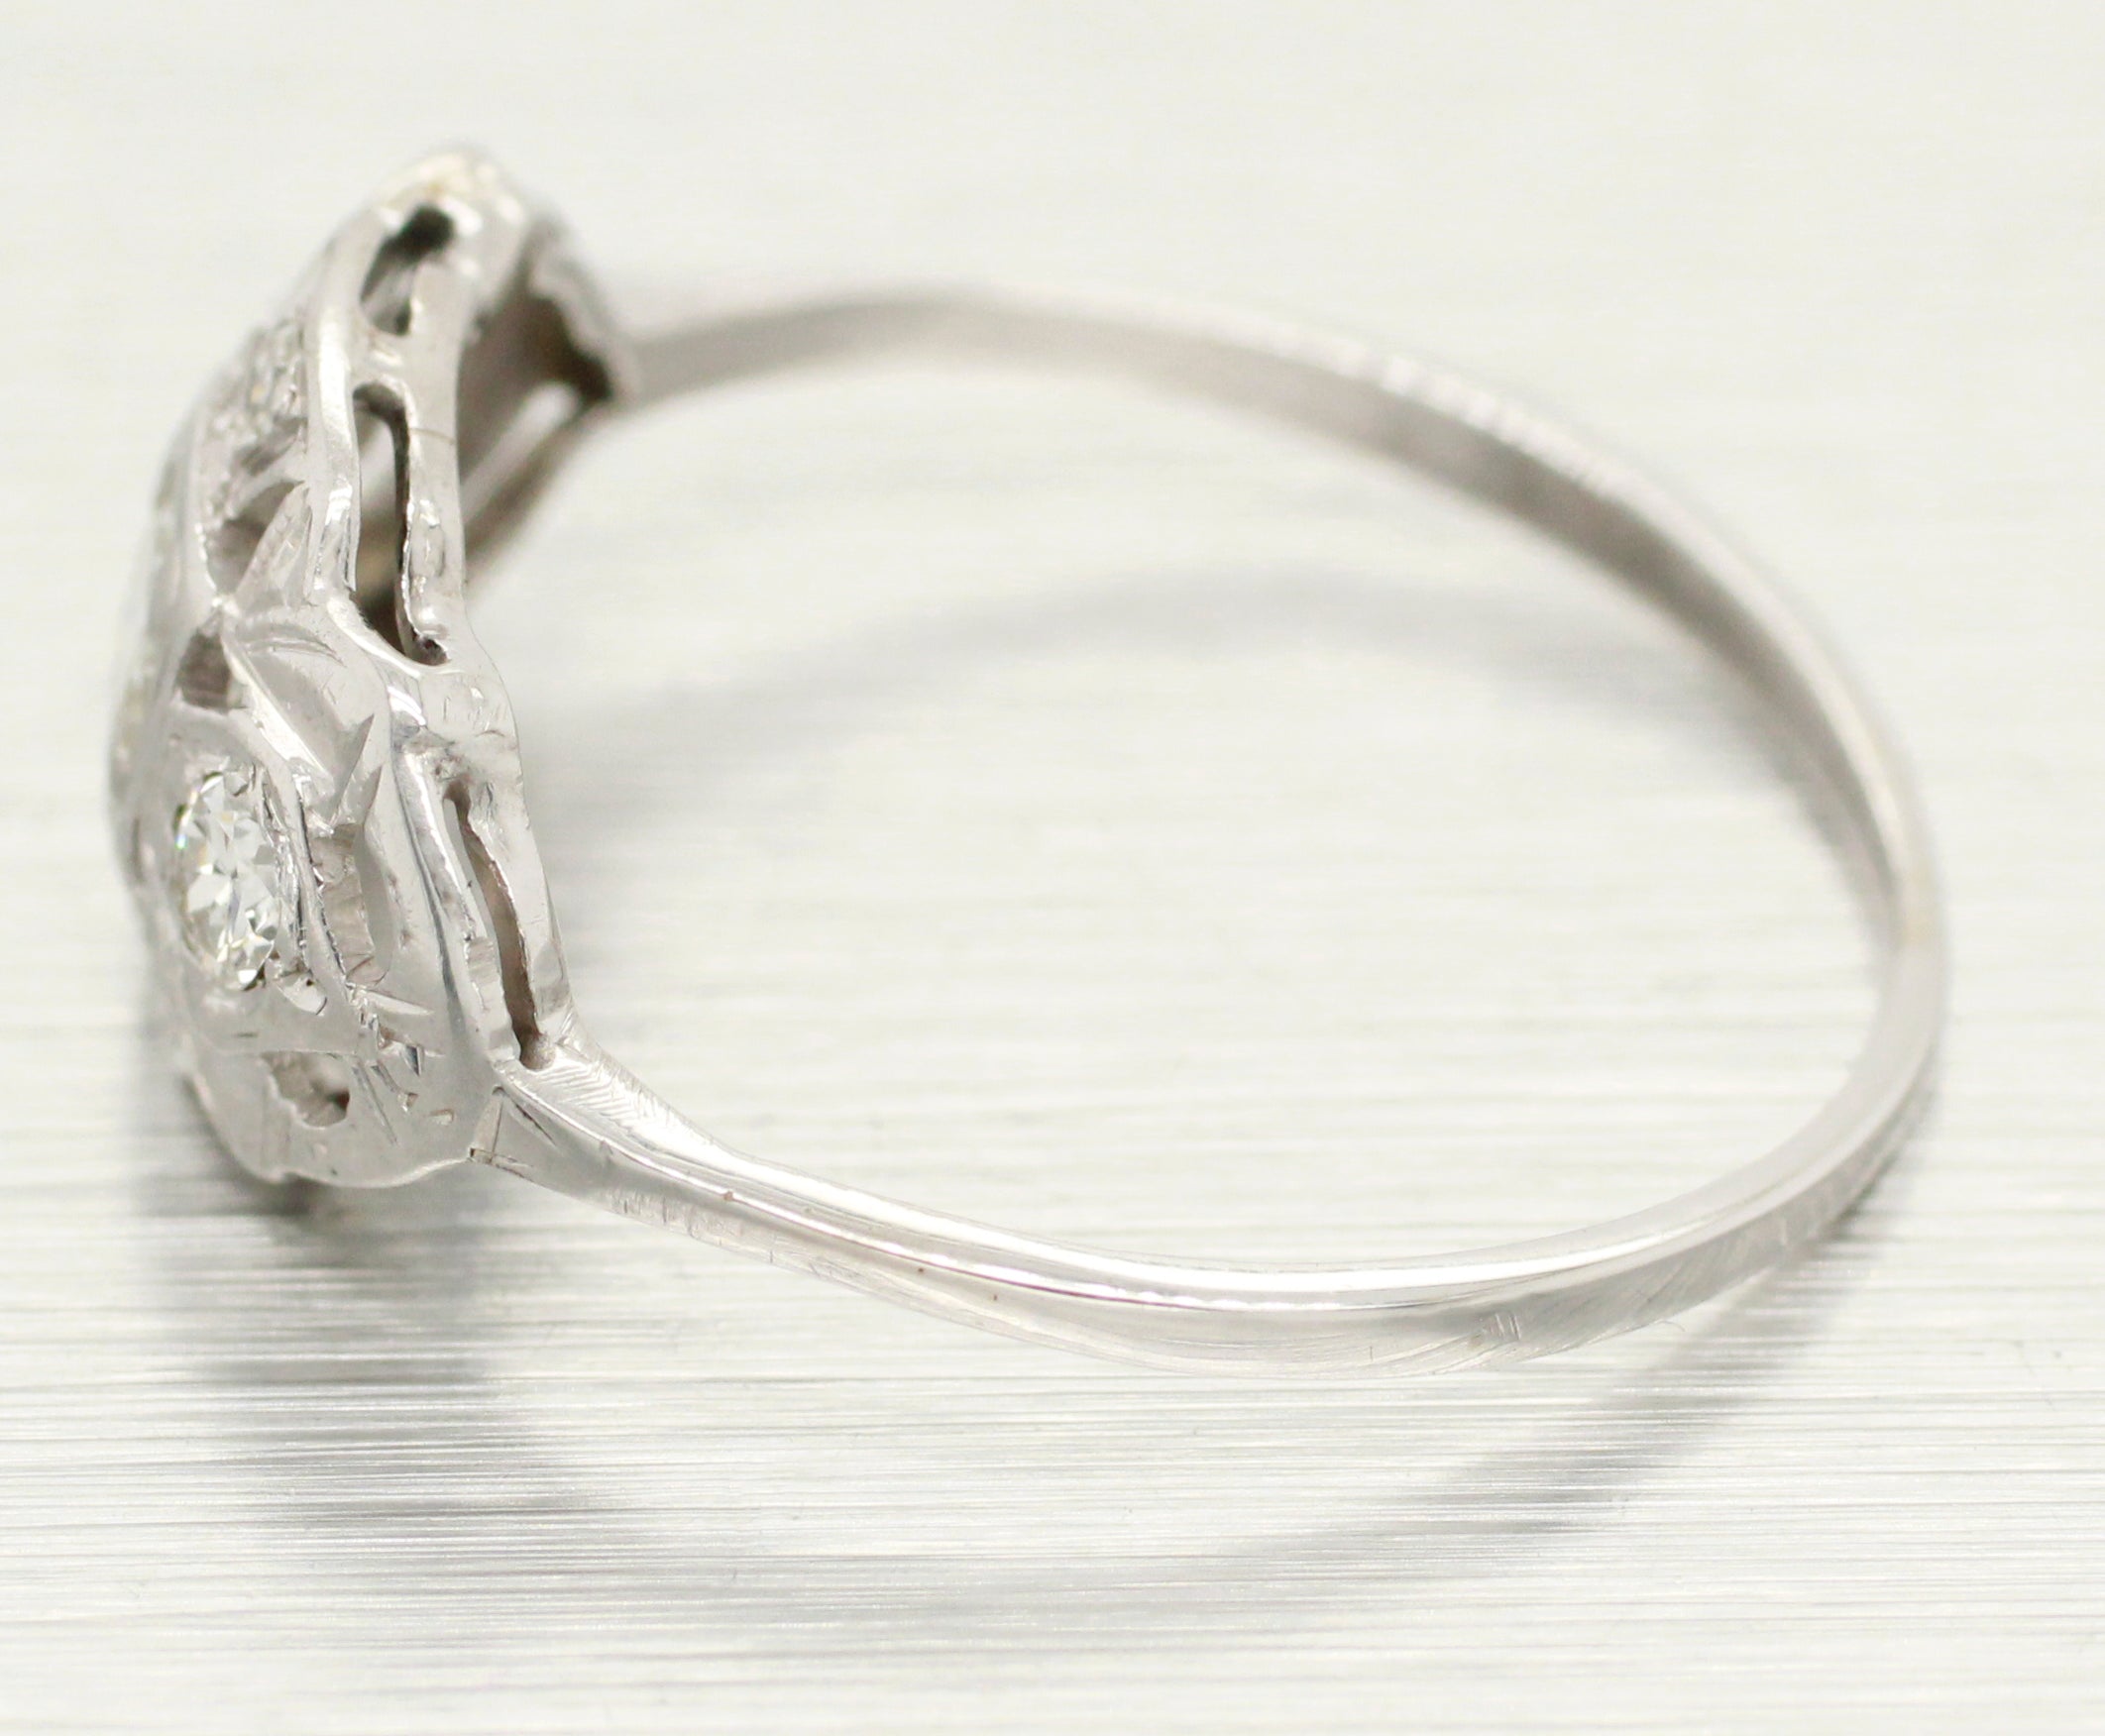 Antique Art Deco Filigree 0.21ctw Diamond Ring - 14k White Gold Band - Size 7.25